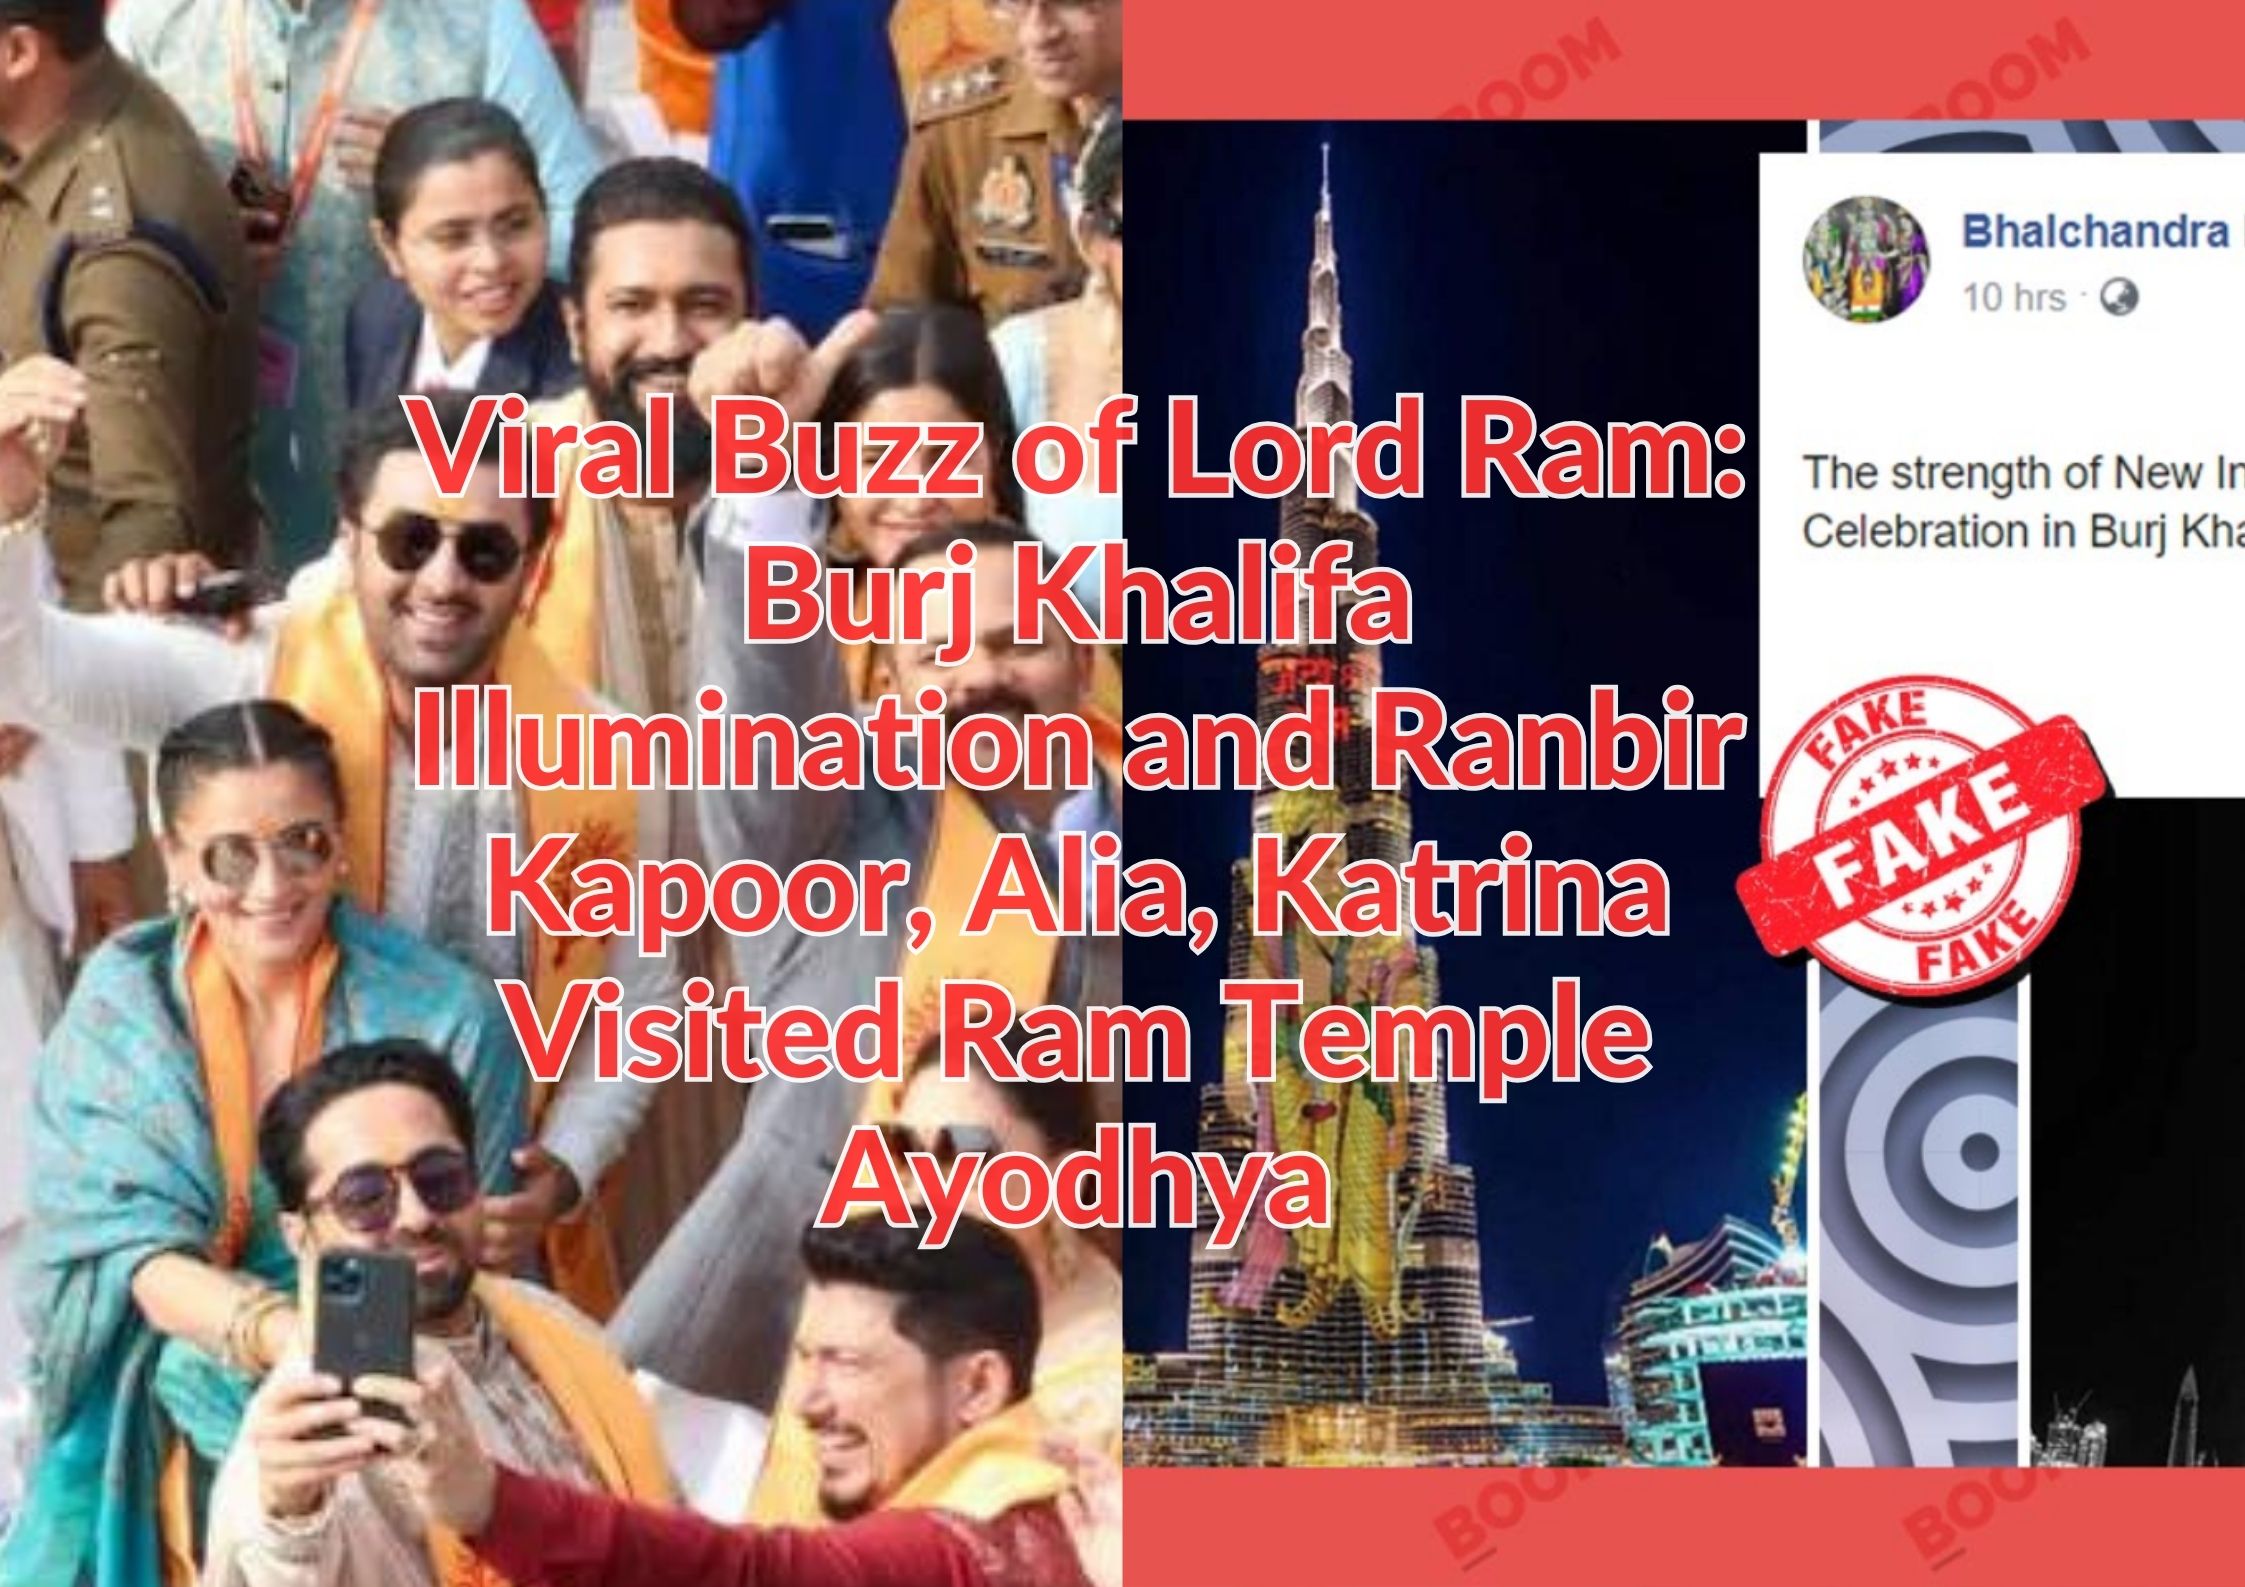 Viral Buzz of Lord Ram: Burj Khalifa Illumination and Ranbir Kapoor, Alia, Katrina Visited Ram Temple Ayodhya